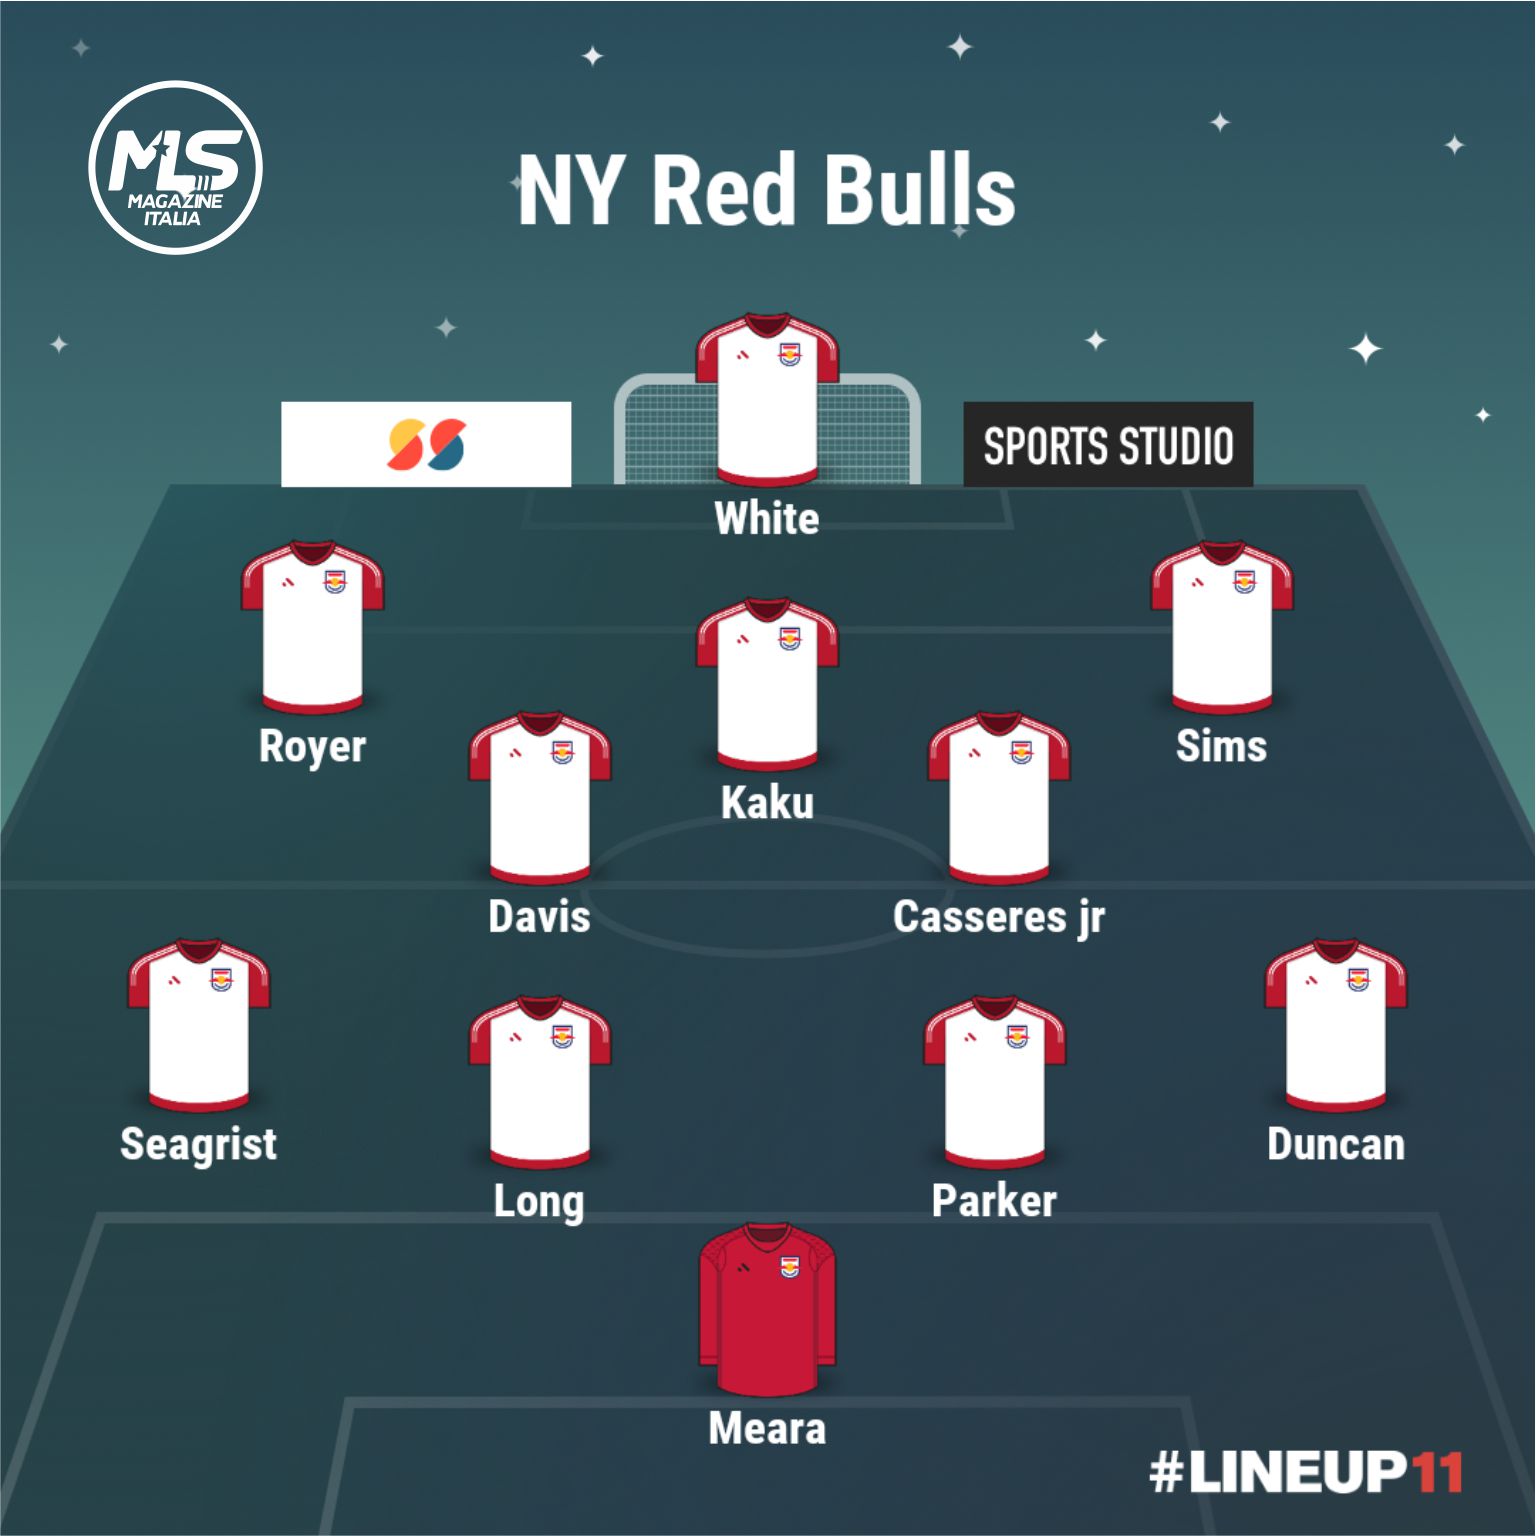 NY Red Bulls | MLS Magazine Italia